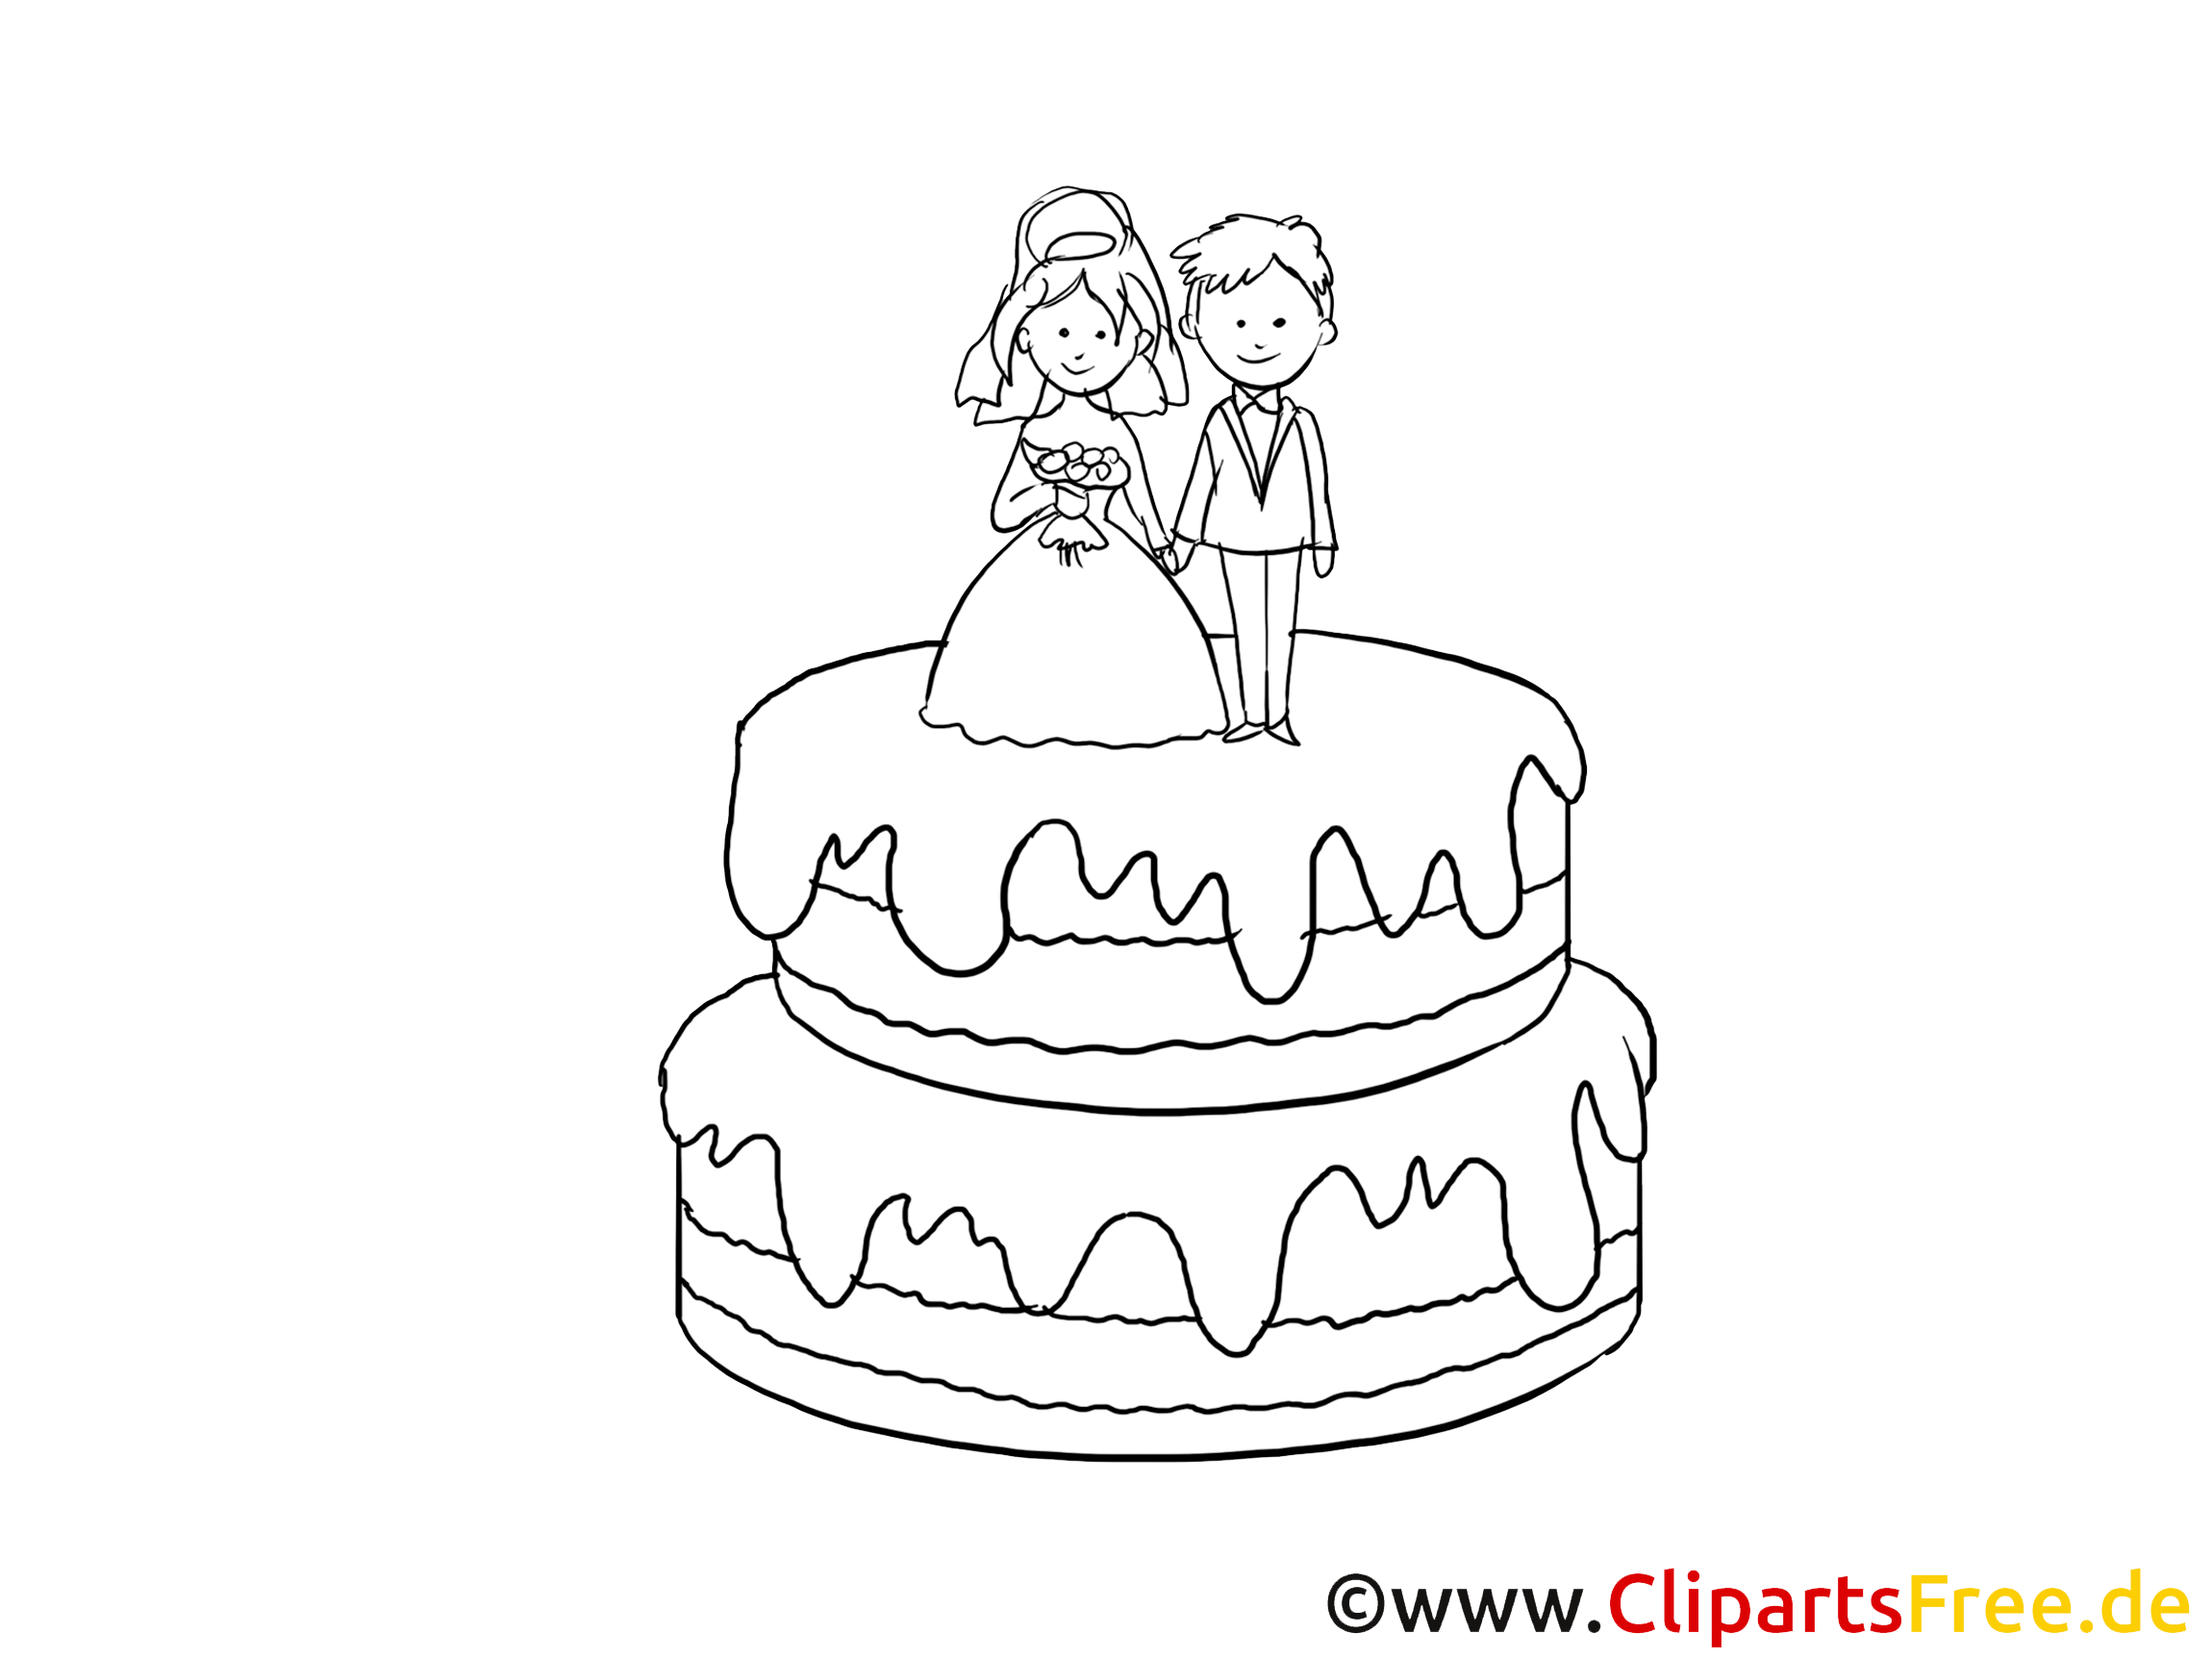 clipart torte gratis - photo #5